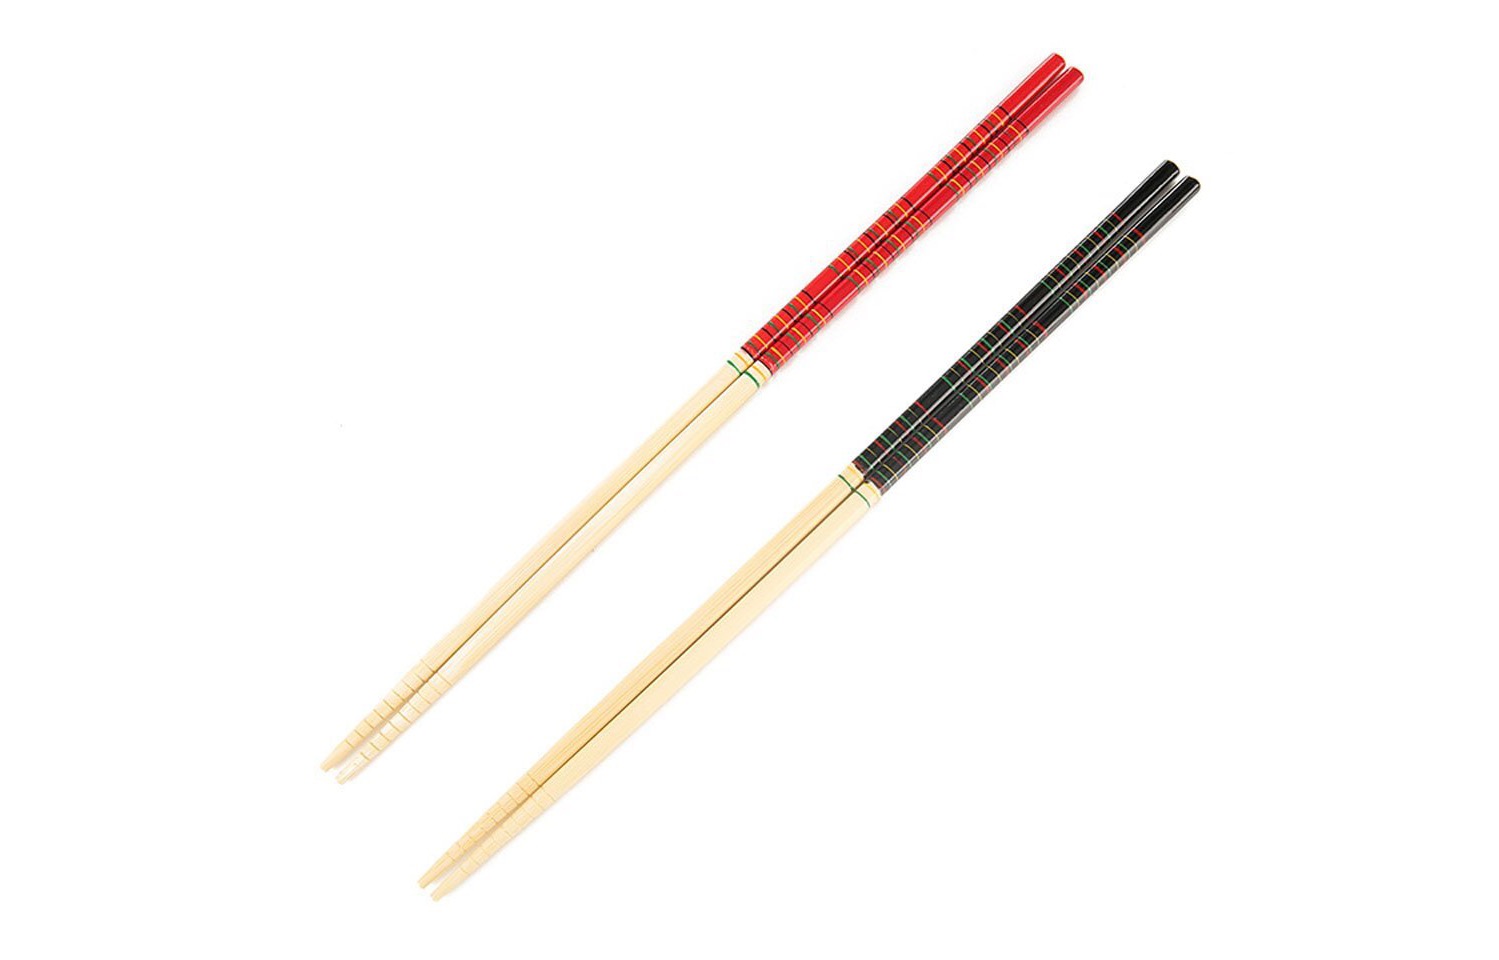 Dealglad's 13" bamboo cooking chopsticks. ($8 for a 5-pair set)